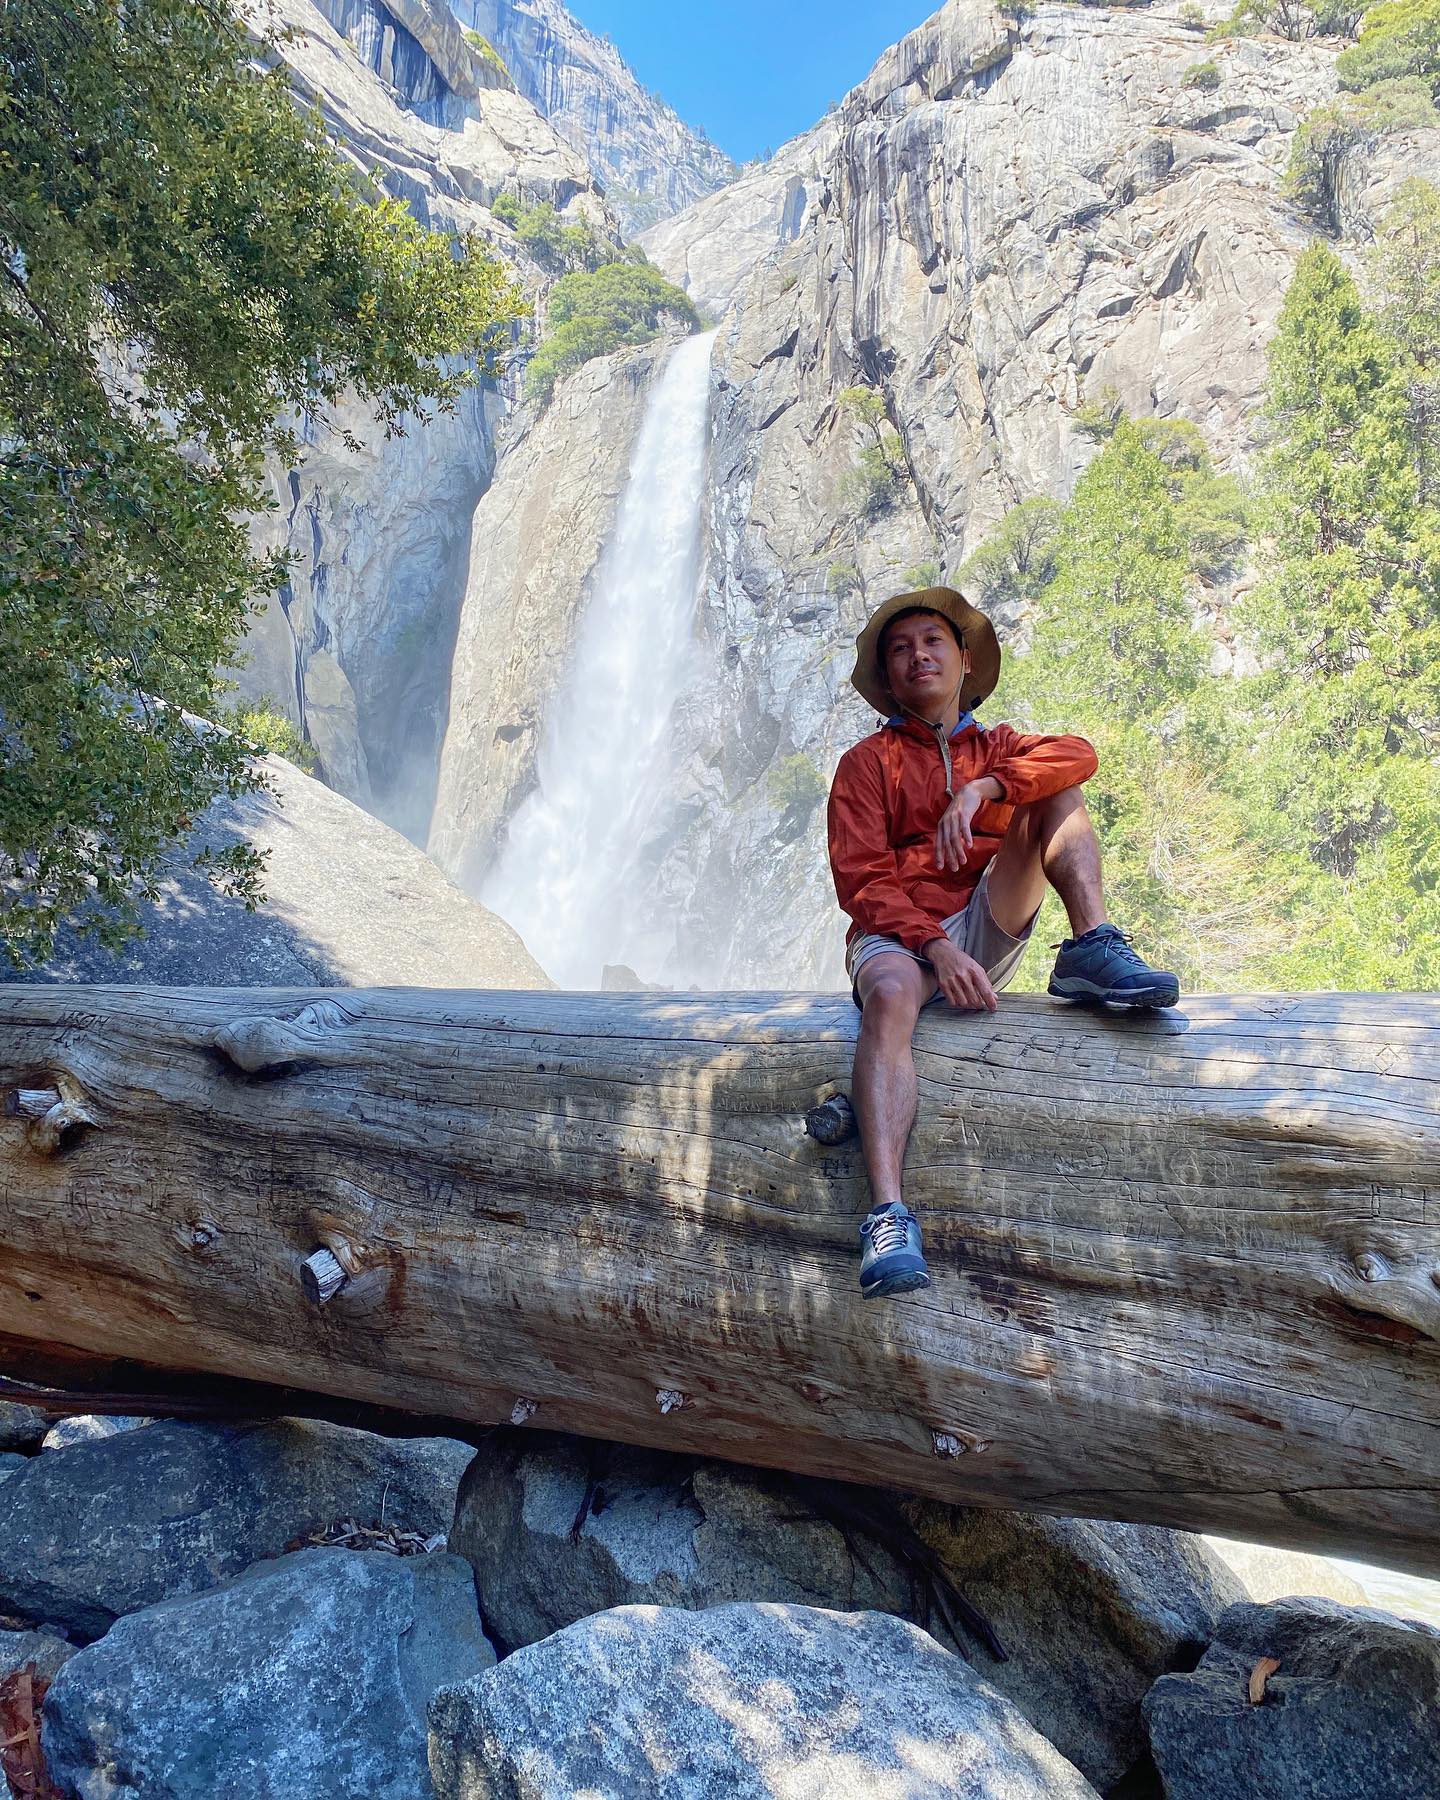 Hike to unforgettable views

#YosemiteNationalPark #marxtermindUS